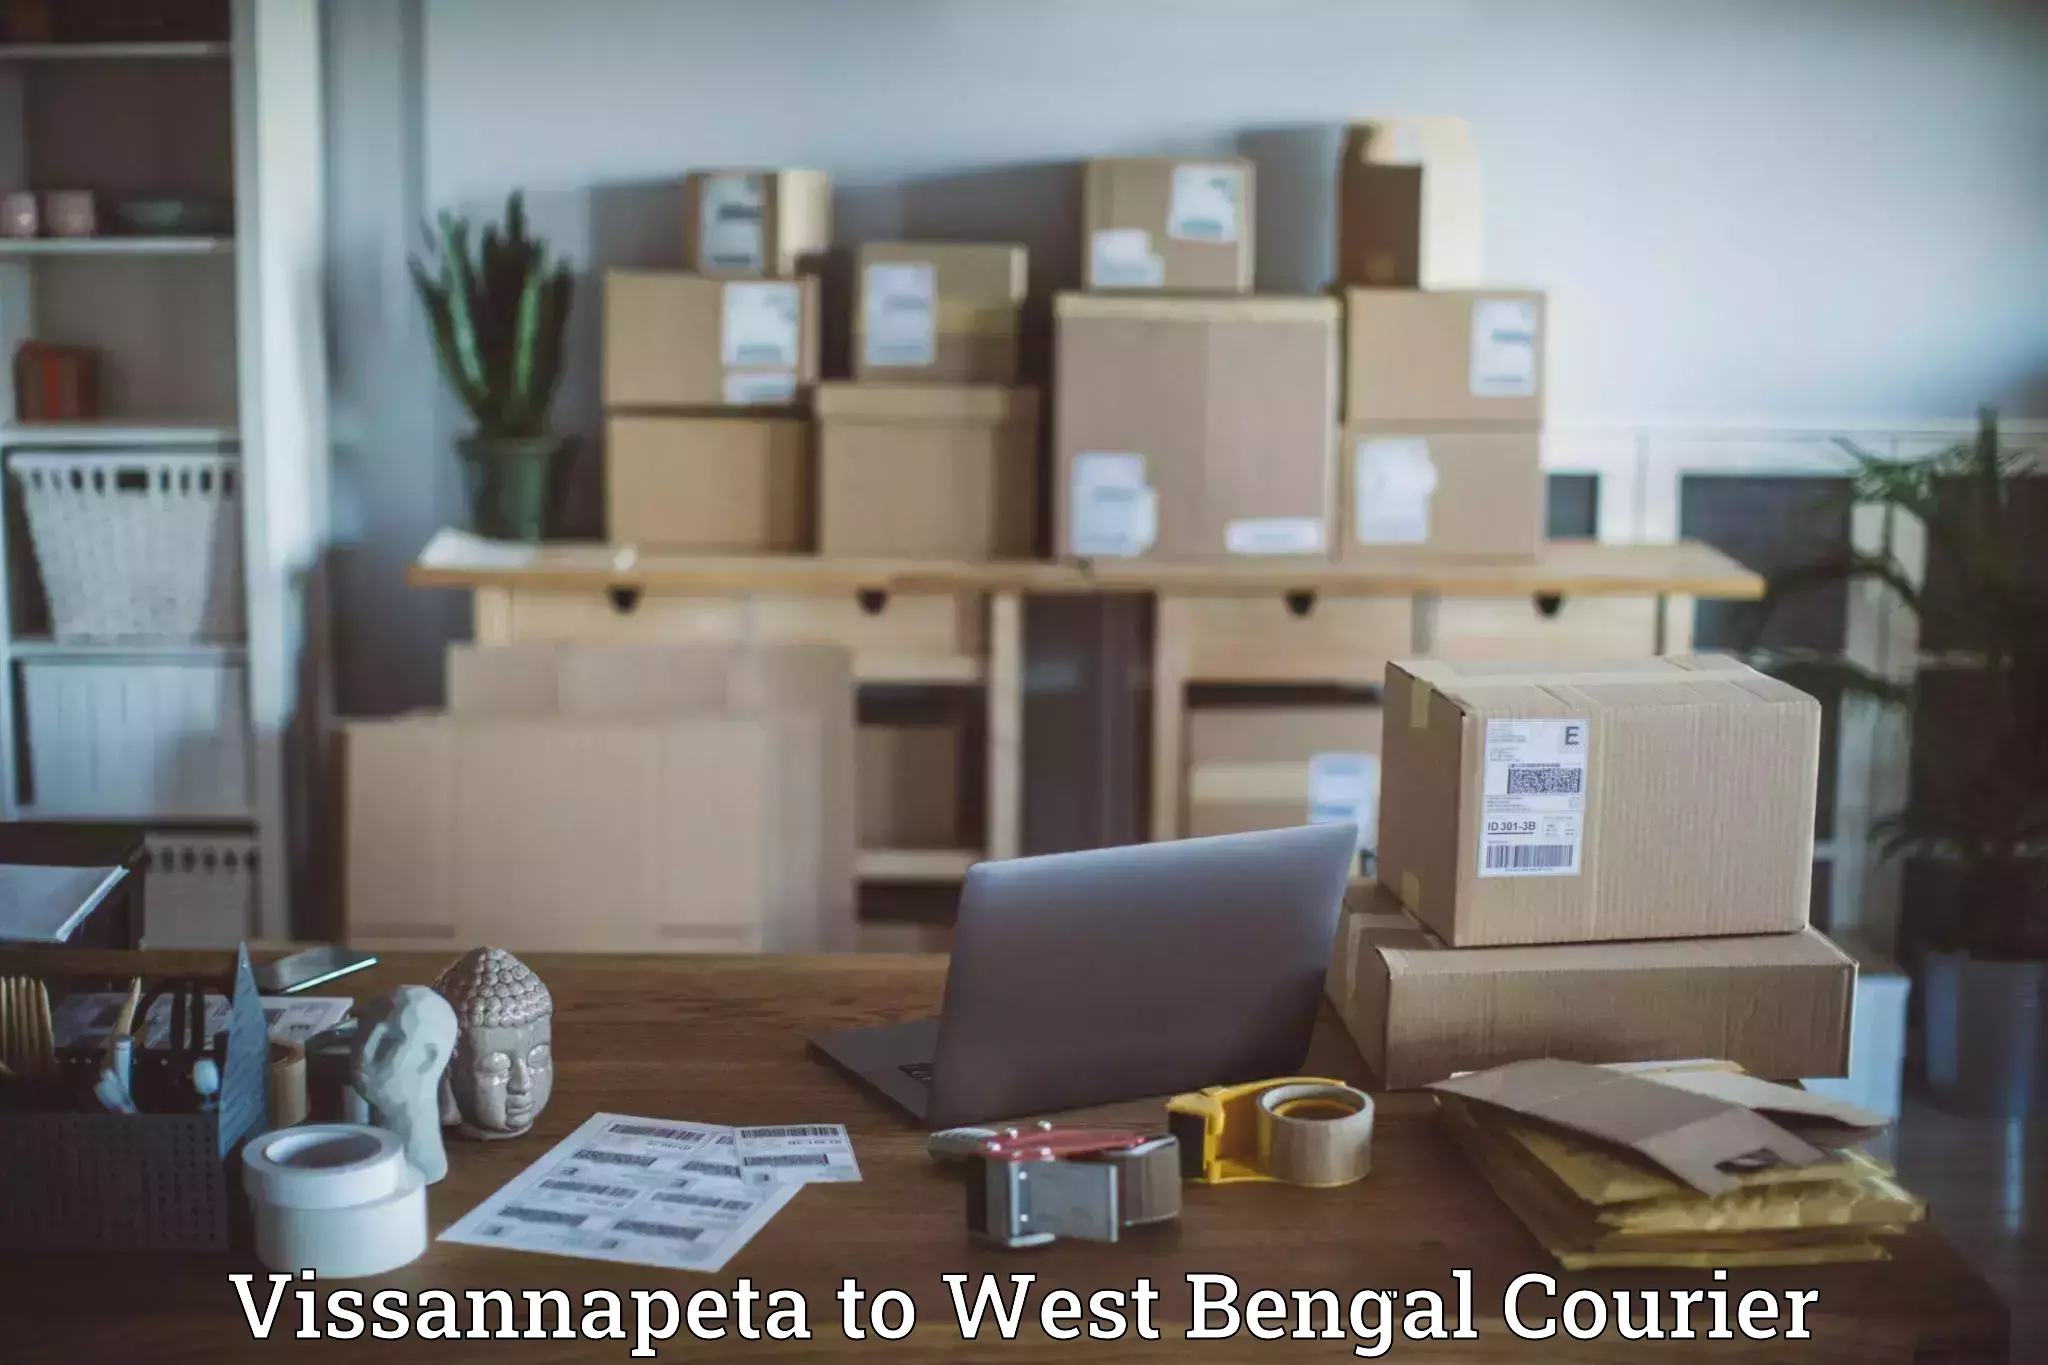 Efficient order fulfillment Vissannapeta to West Bengal